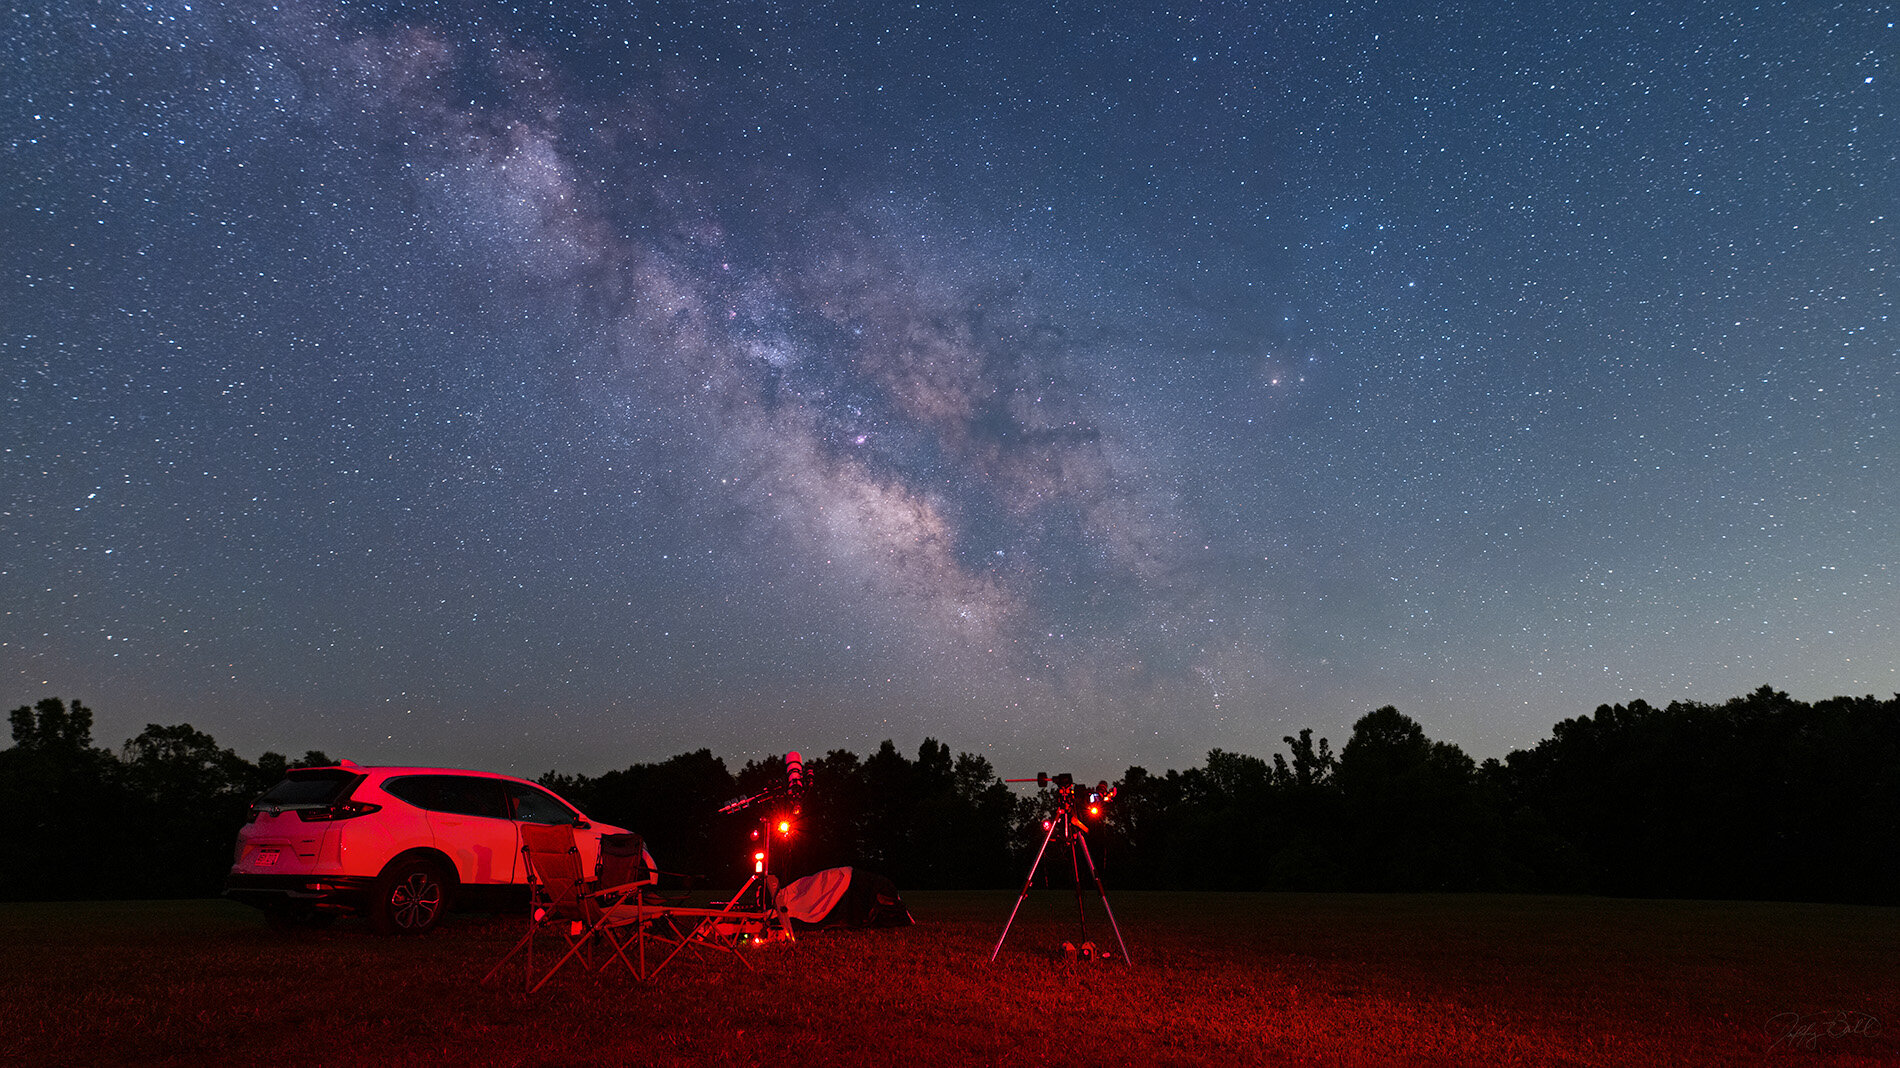 The Milky Way in June 2021 at Calhoun County Dark Sky Park, WV